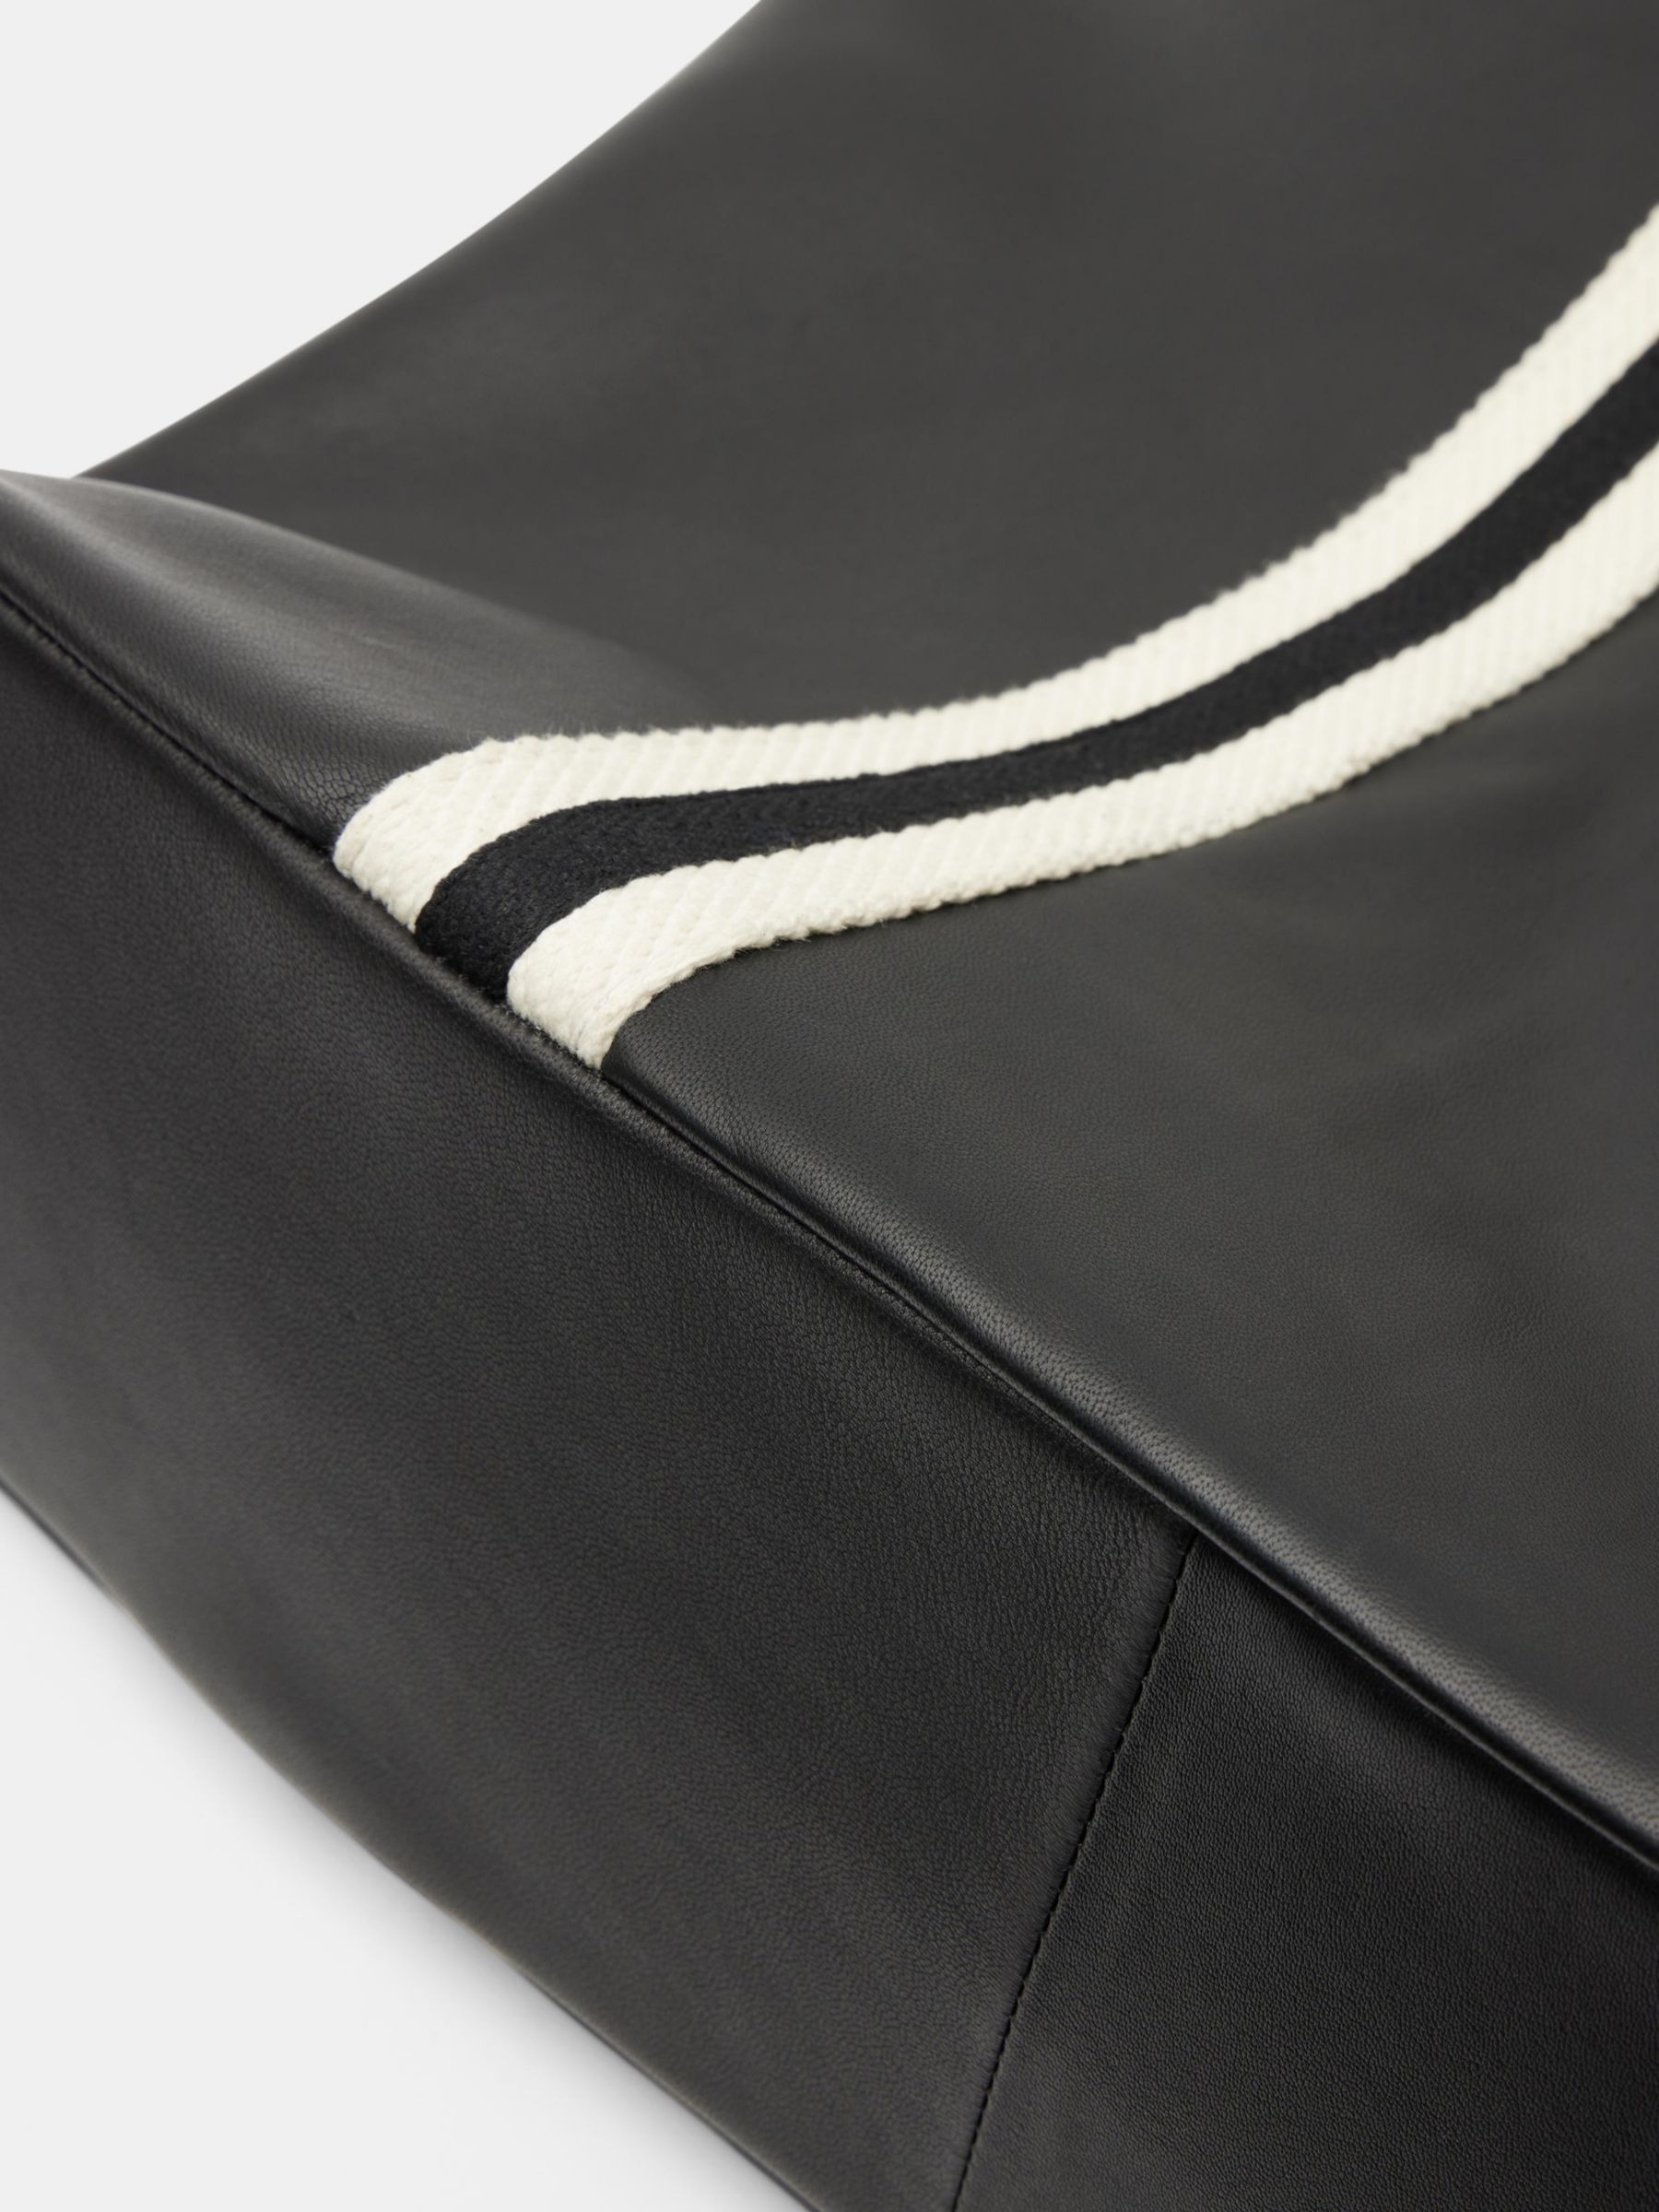 HUSH Marlon Oversized Leather Tote Bag, Black, One Size